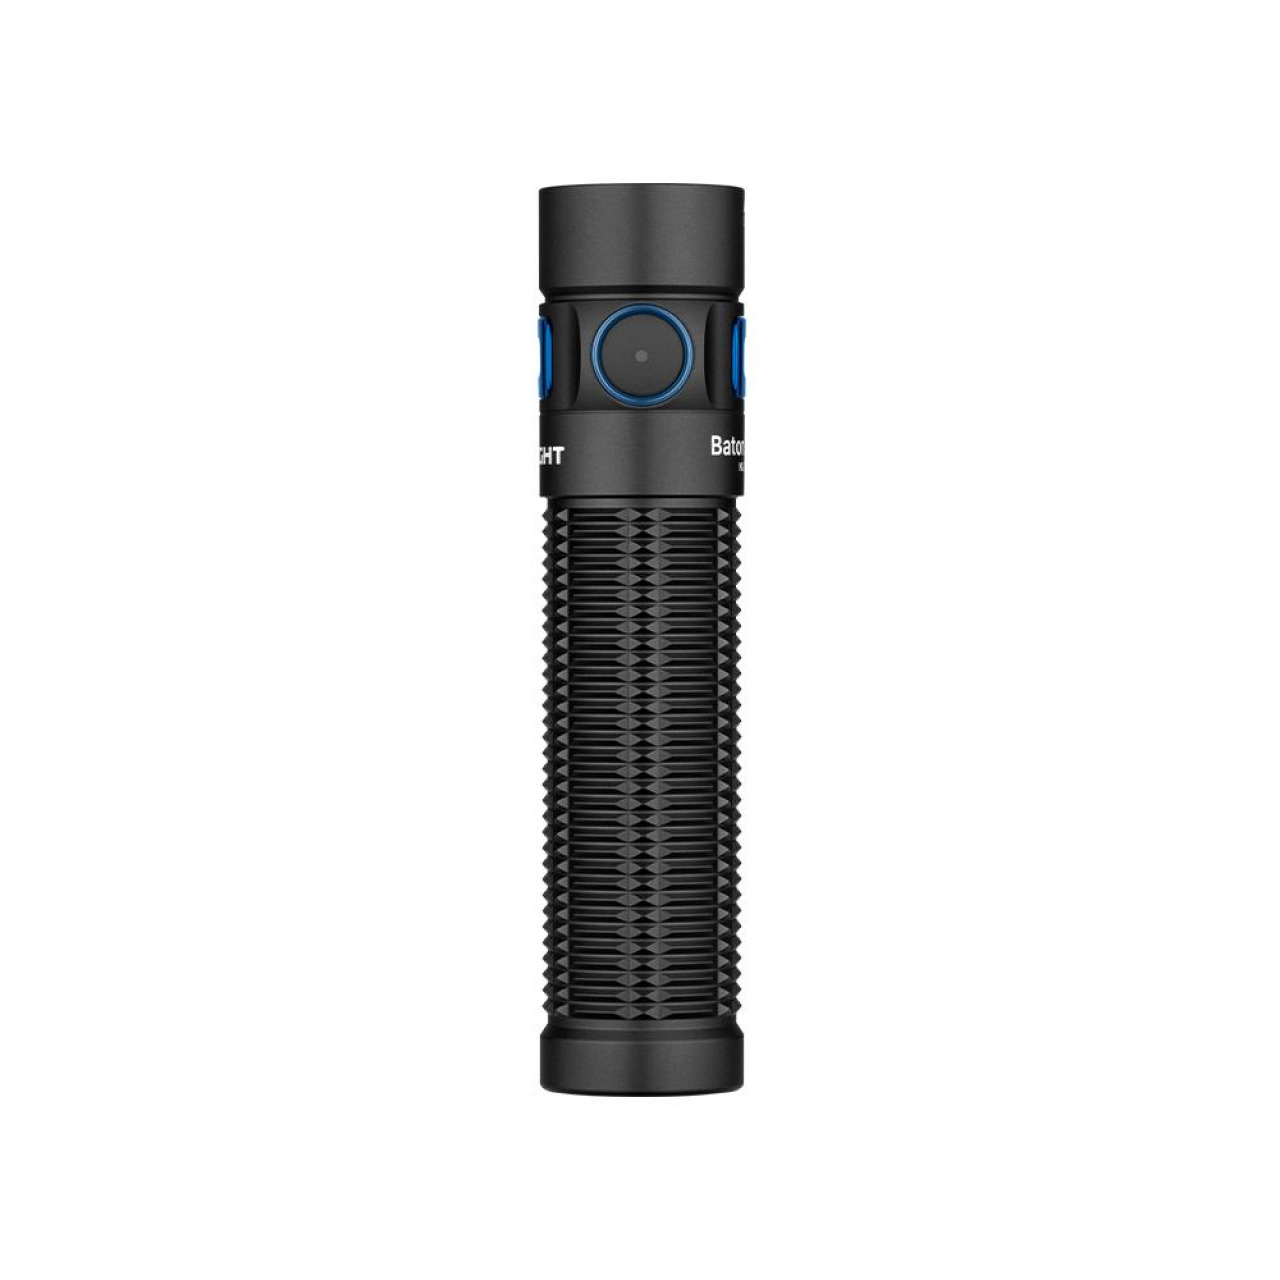 Olight Baton 3 Pro Max CW Powerful EDC Rechargeable Flashlight 2500 Lumens-Black